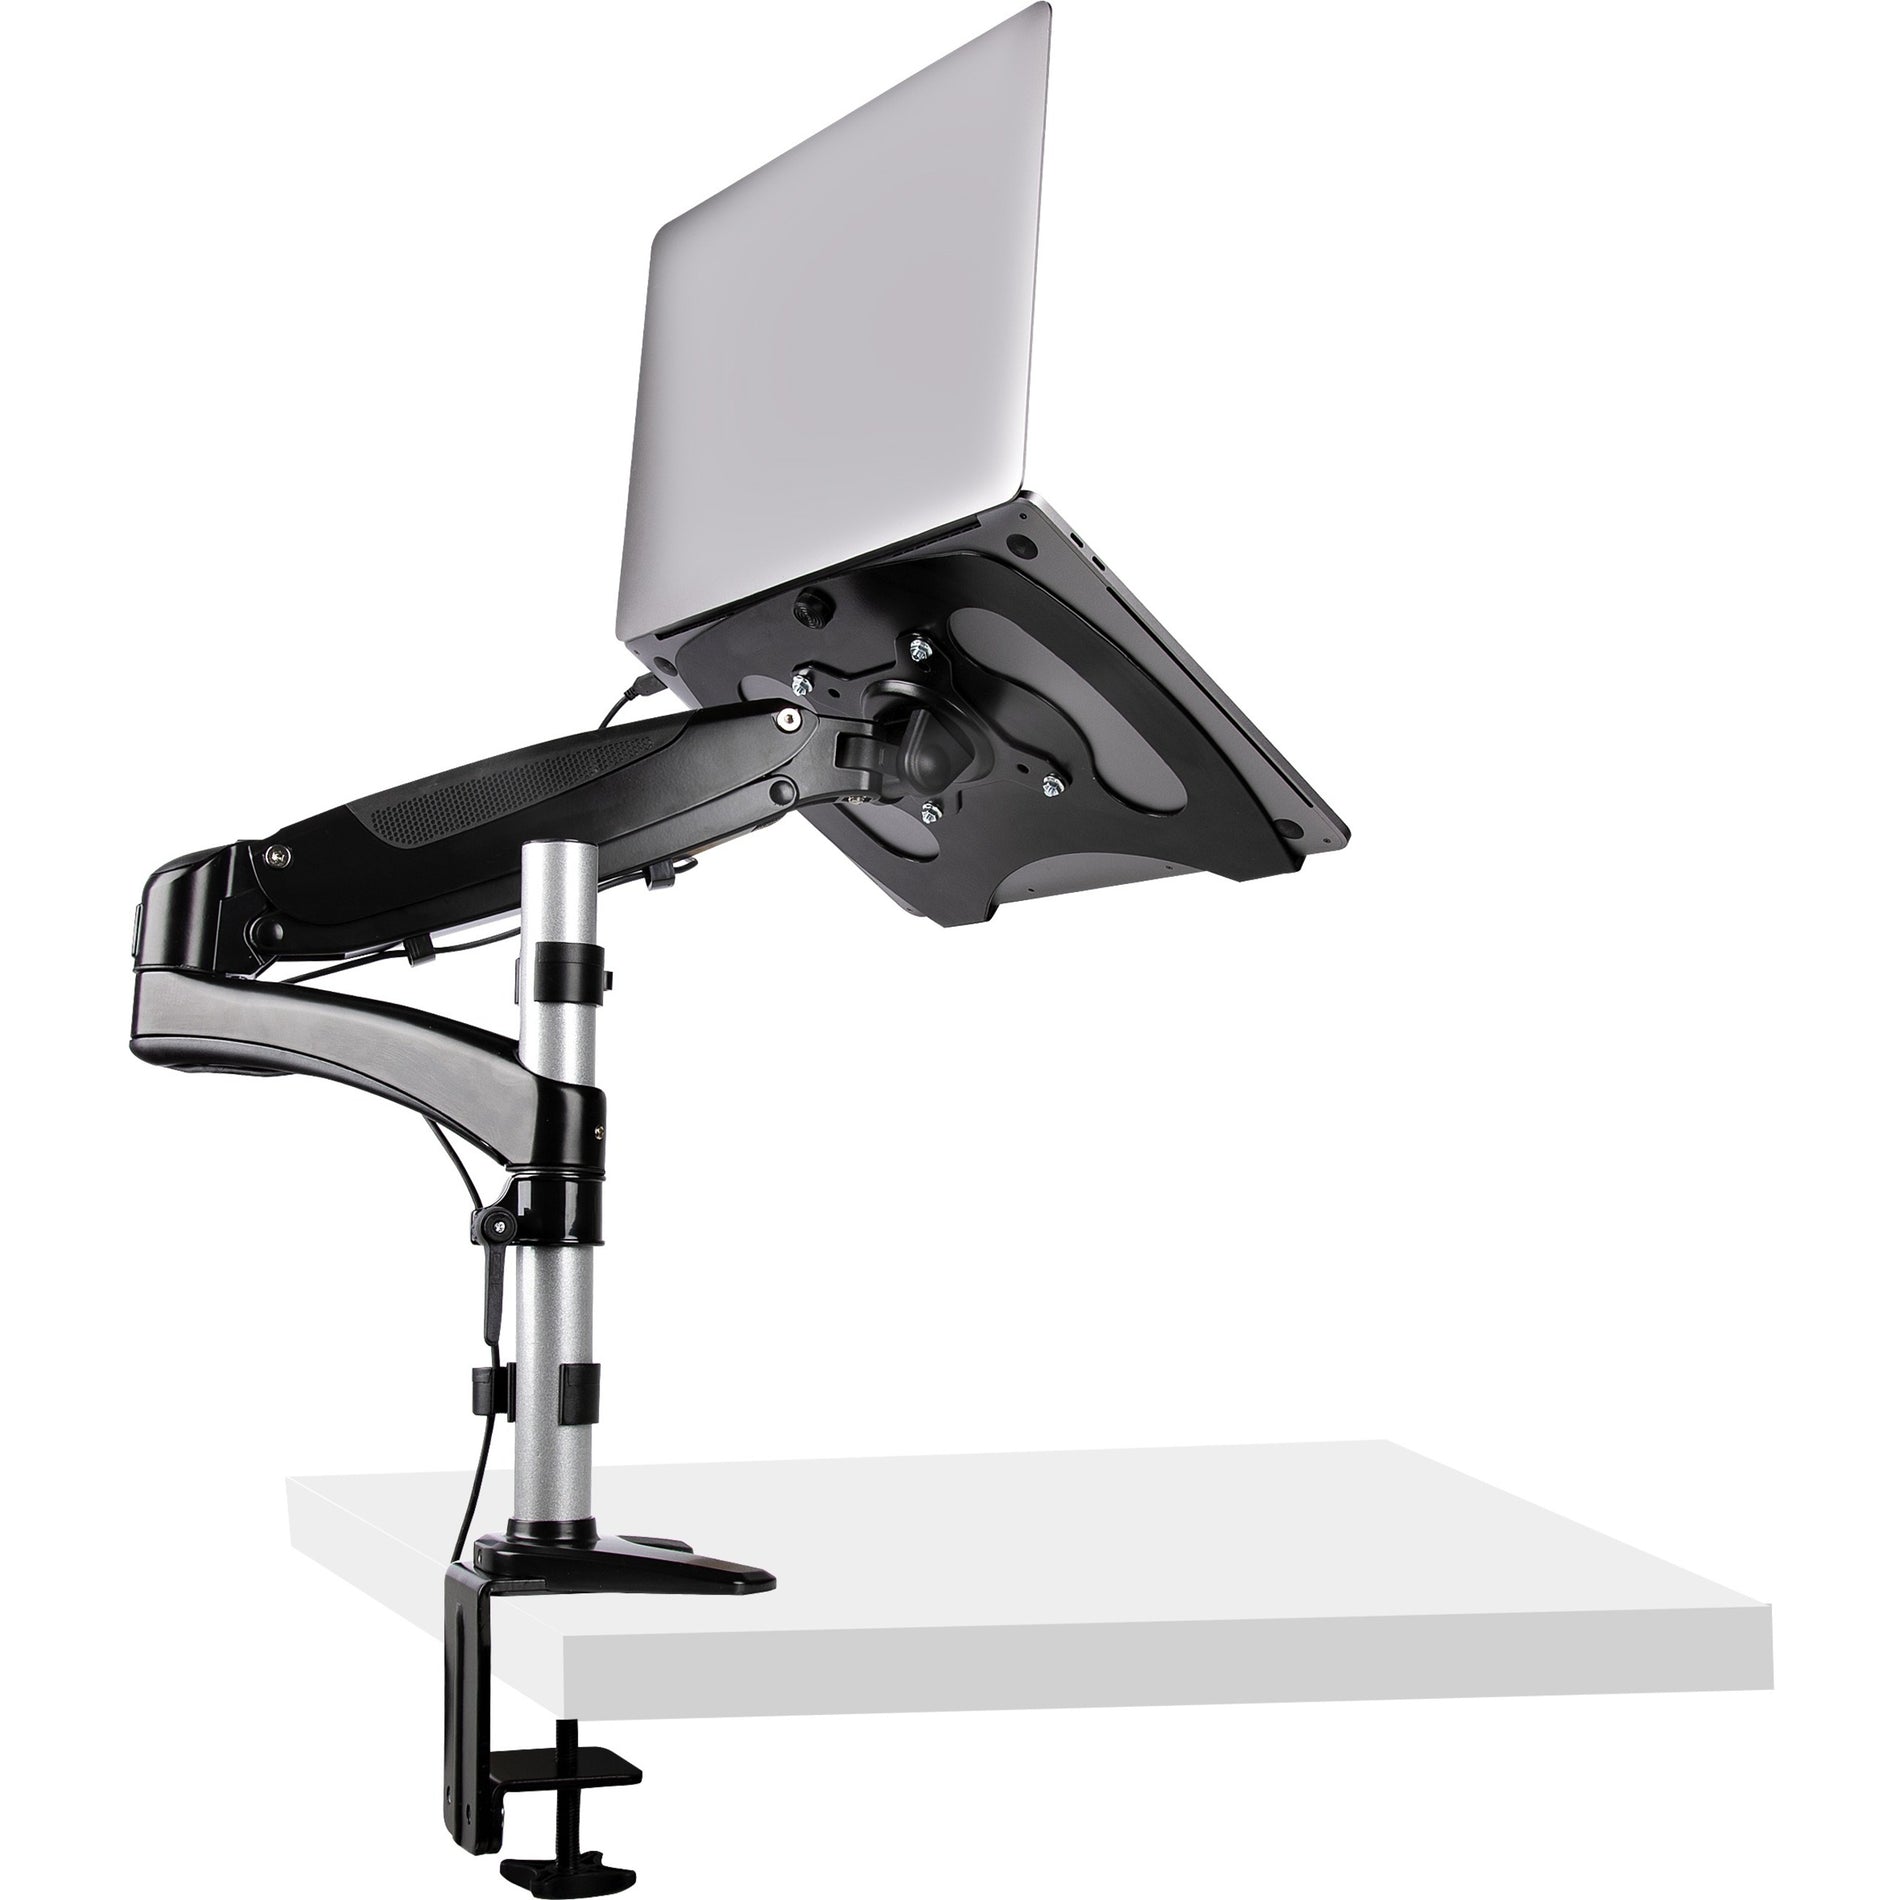 StarTech.com ARMUNONB1 Desk Mount Laptop Arm, Full Motion Articulating Arm/Stand for Laptop or 34 inch Monitor, VESA Mount Laptop Tray, Adjustable